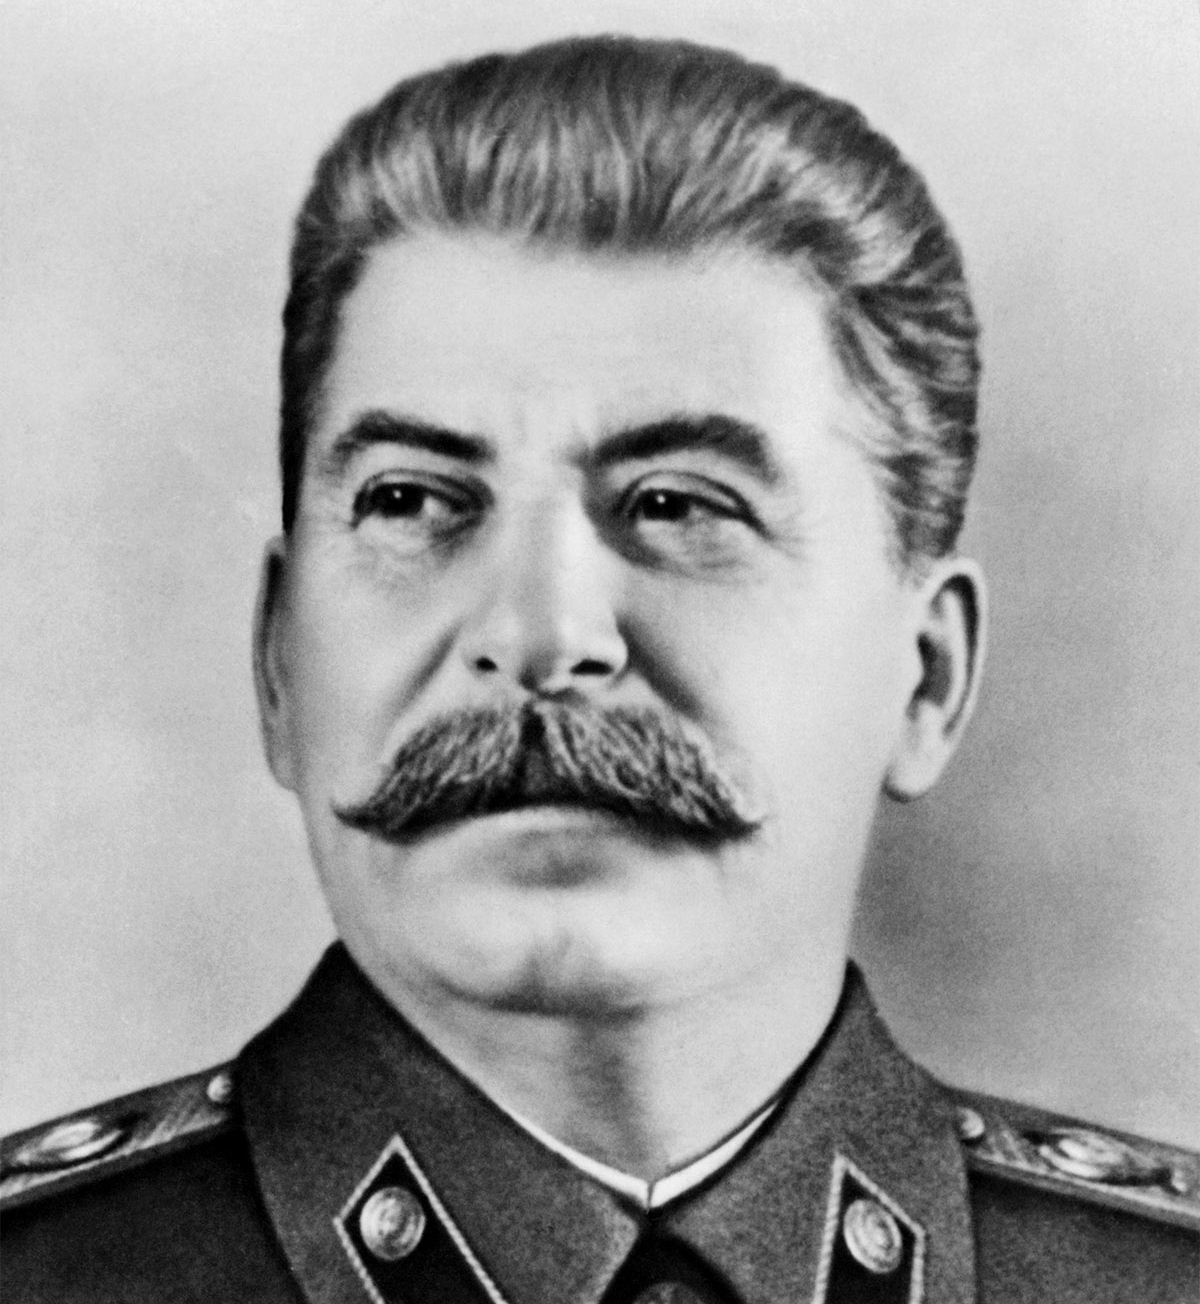 Joseph Stalin [image source]